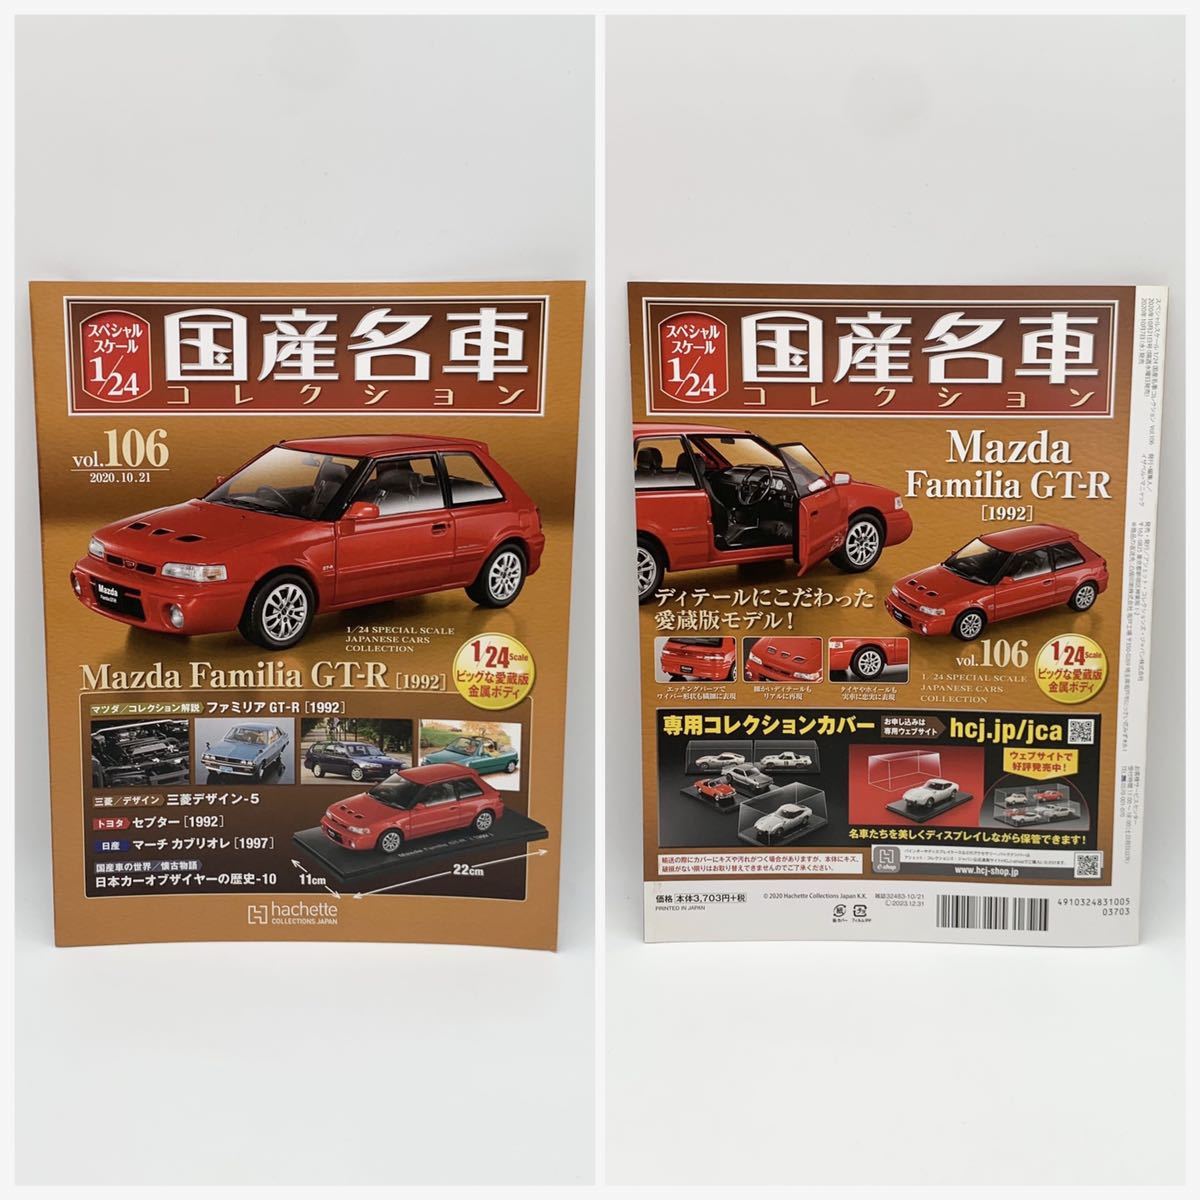 FN11124Q hachette アシェット 国産名車コレクション スペシャルスケール 1/24 vol.106 Mazda Familia GT-R 1992 ファミリア_画像8